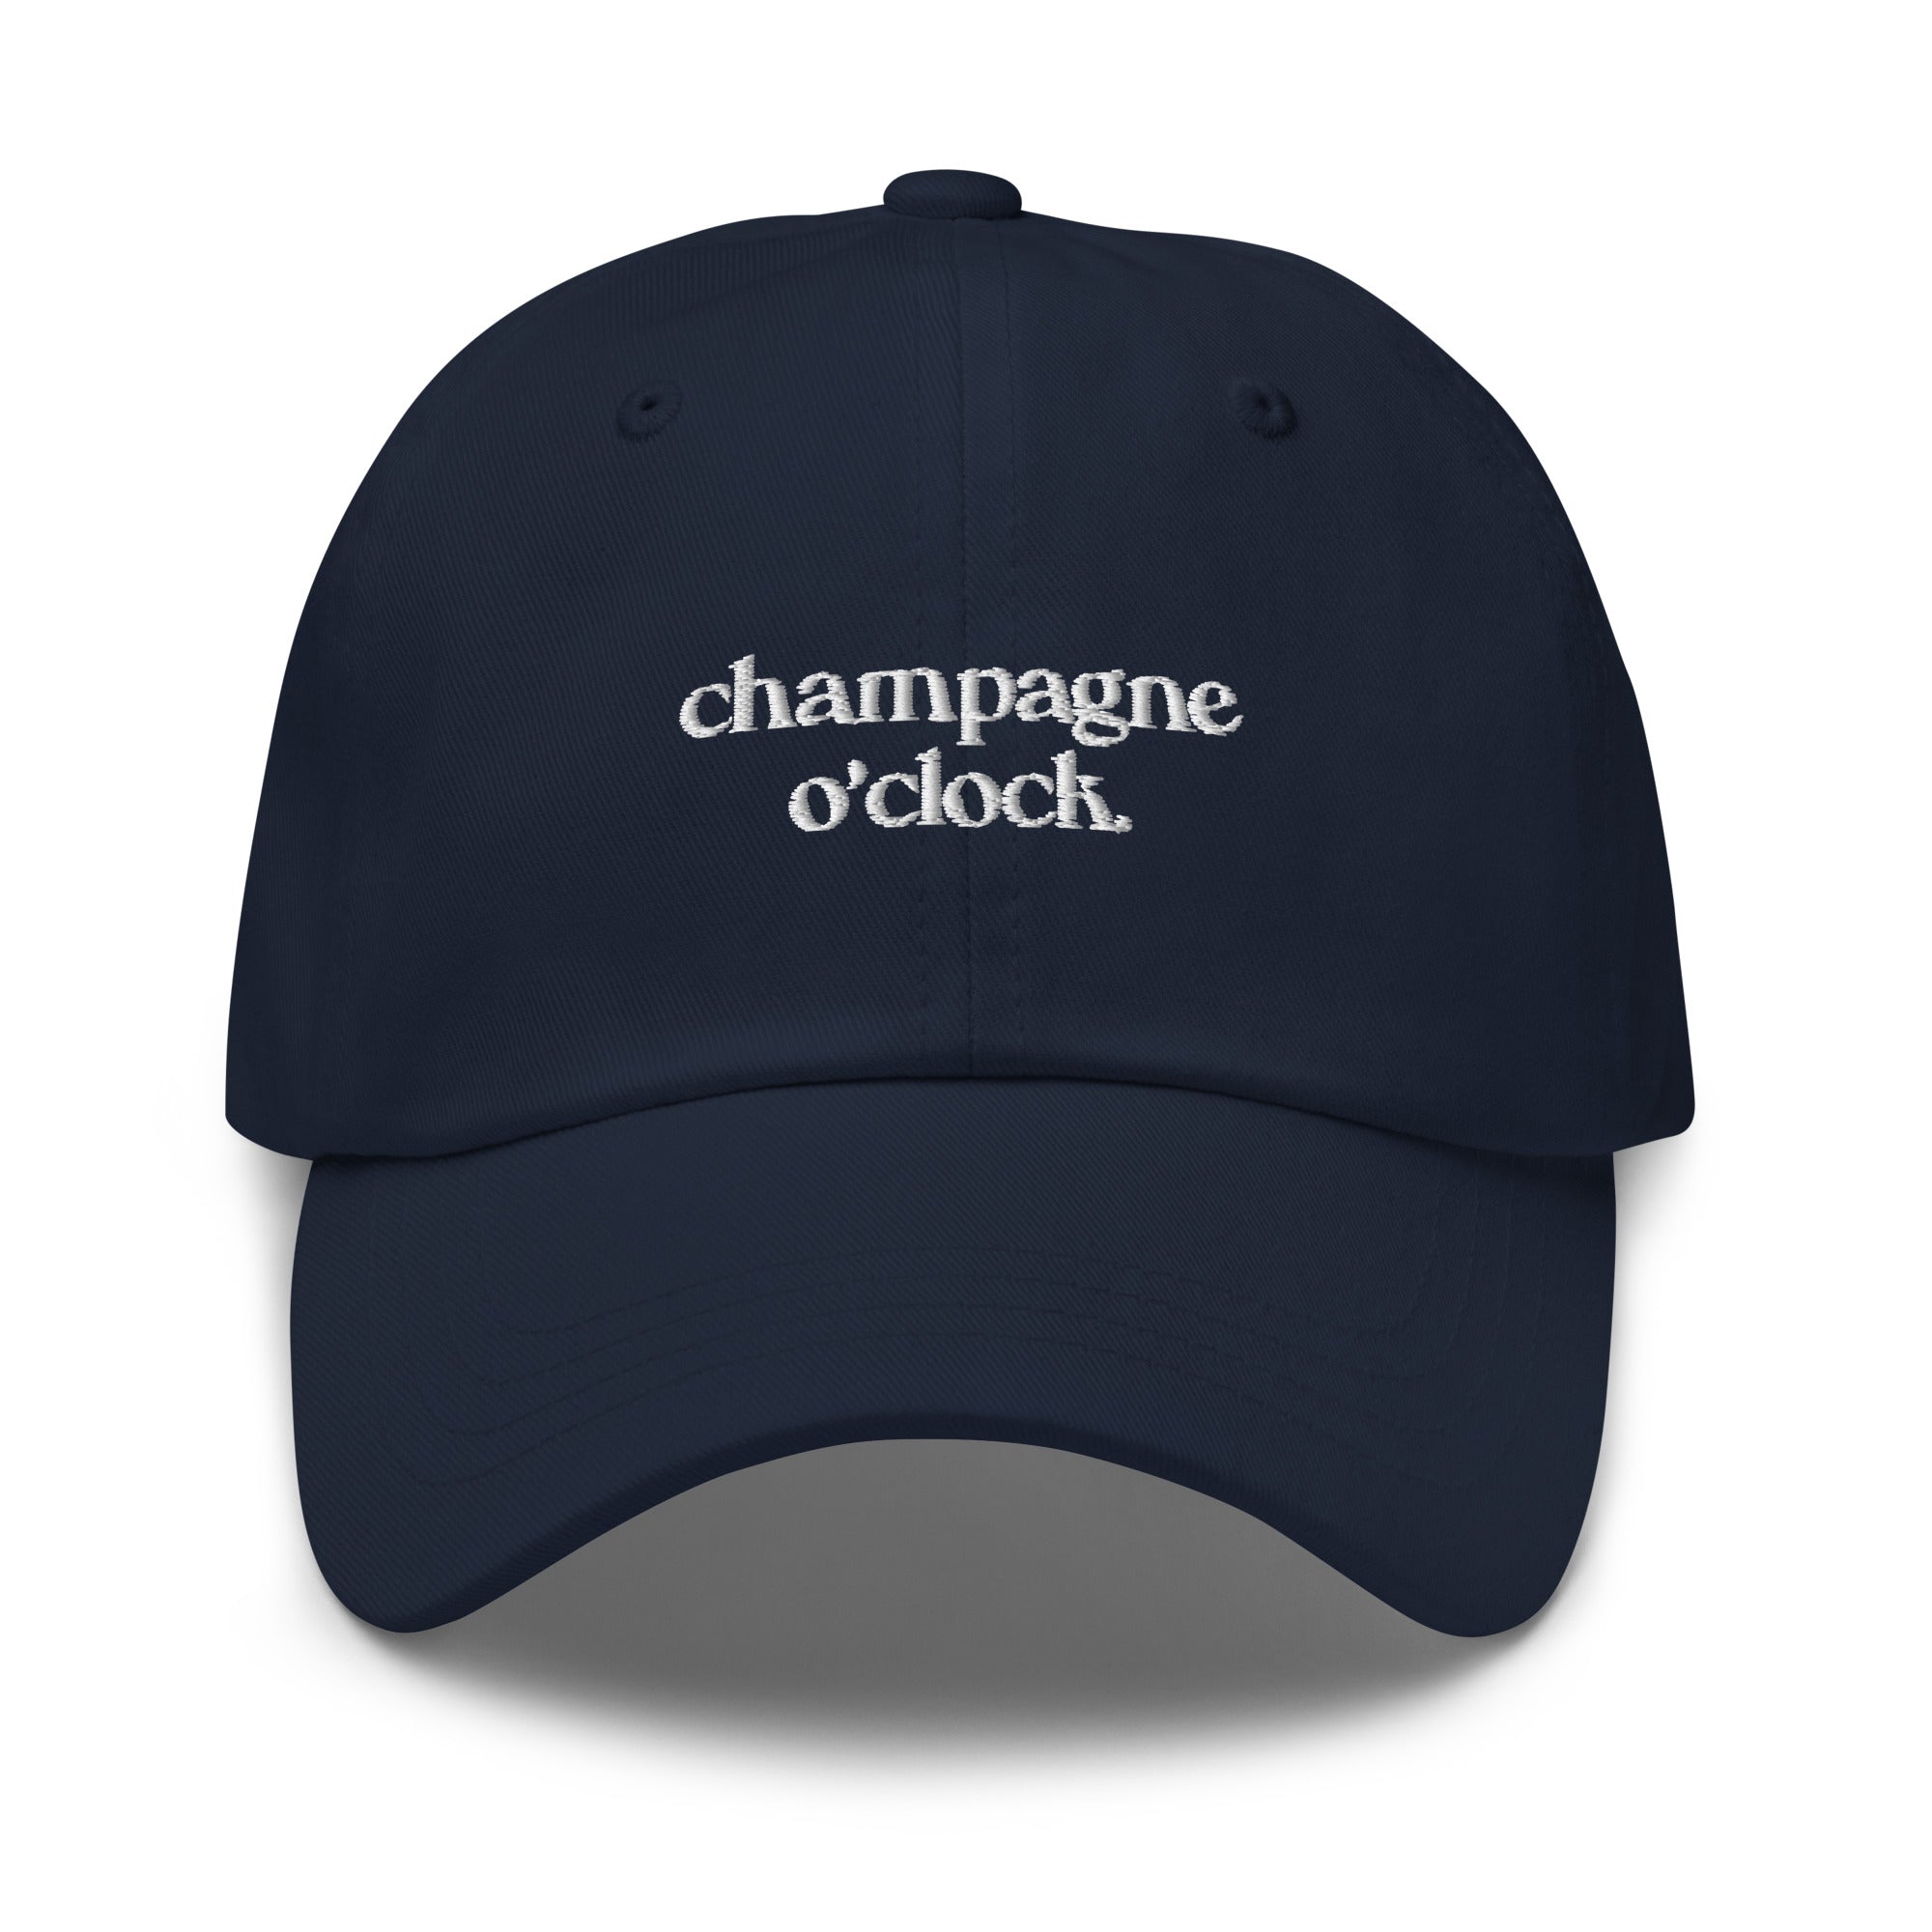 Champagne o'clock - Dad hat